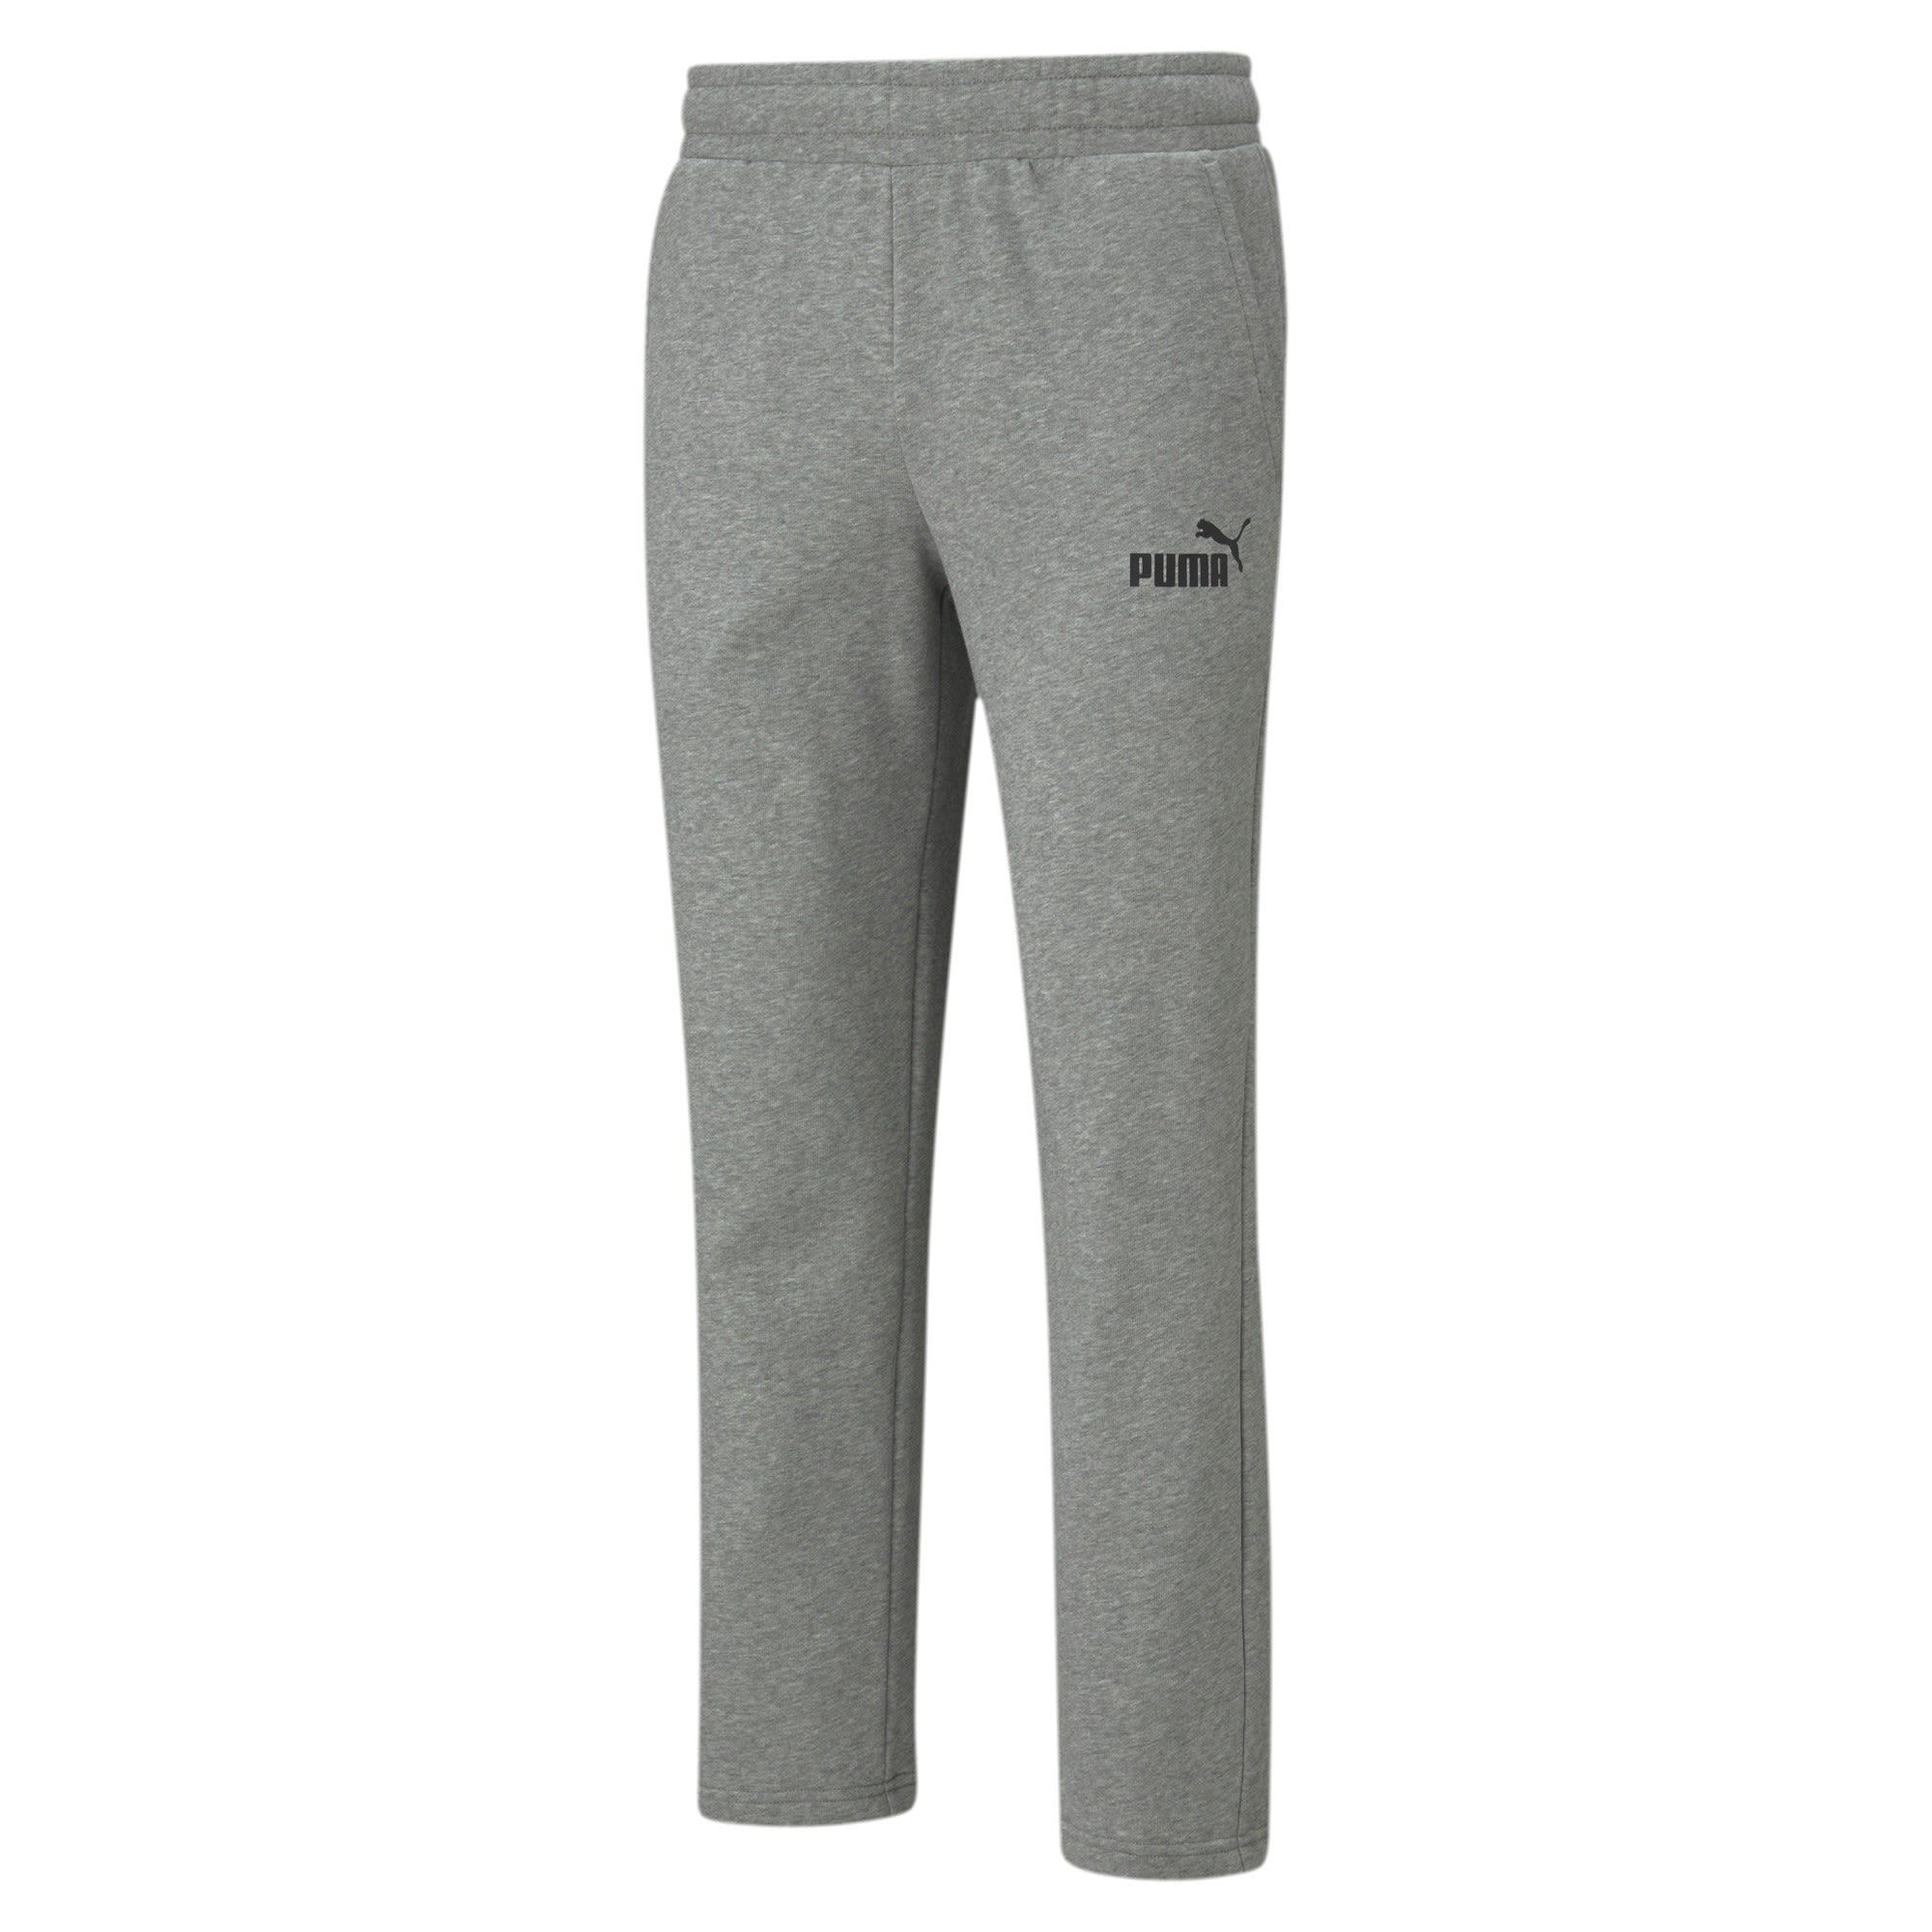 Puma Essentials Sweat Pants Grau- Male Softshellhosen- Grsse S - Short - Farbe Medium Gray Heather